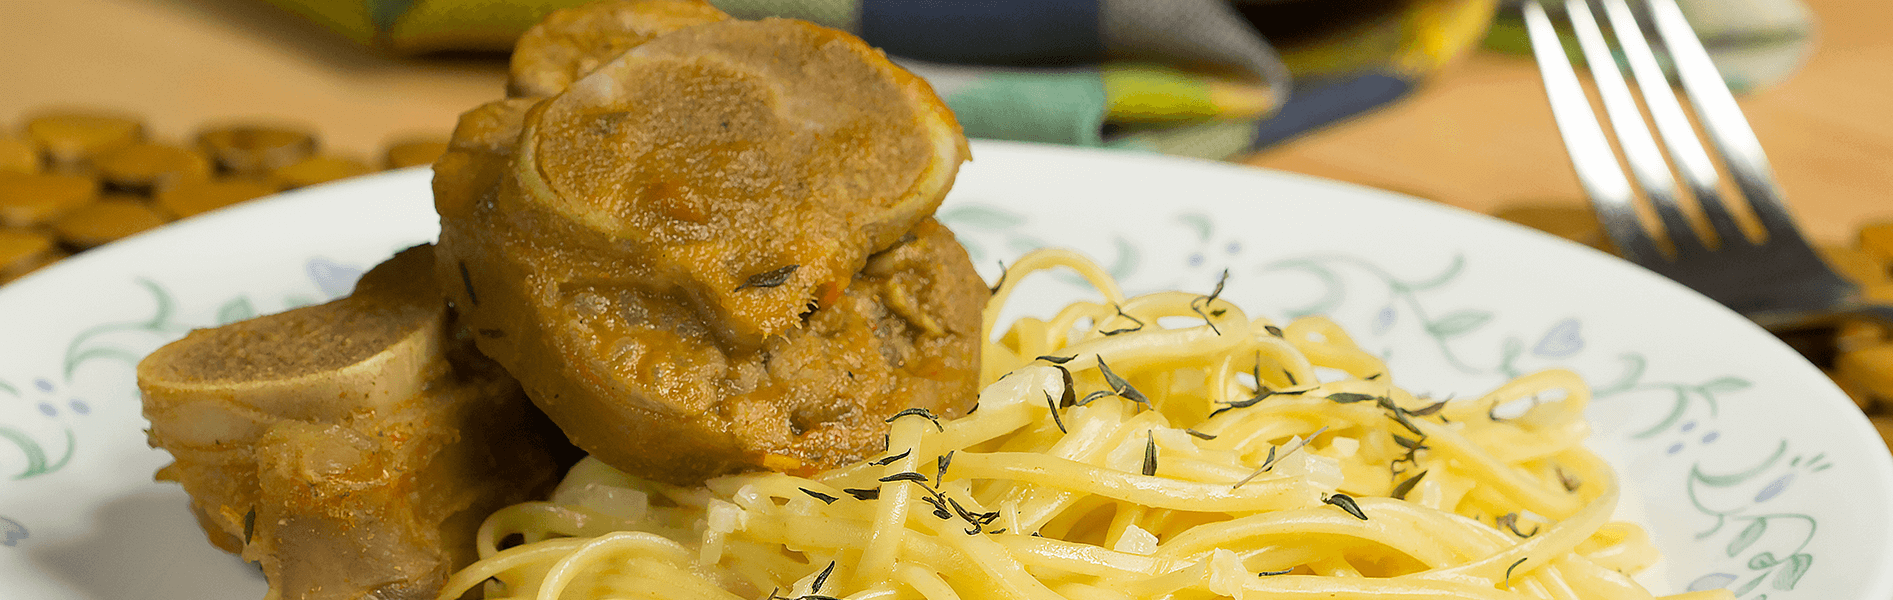 Estofado de osobucco de res con Spaghetti Doria a la crema